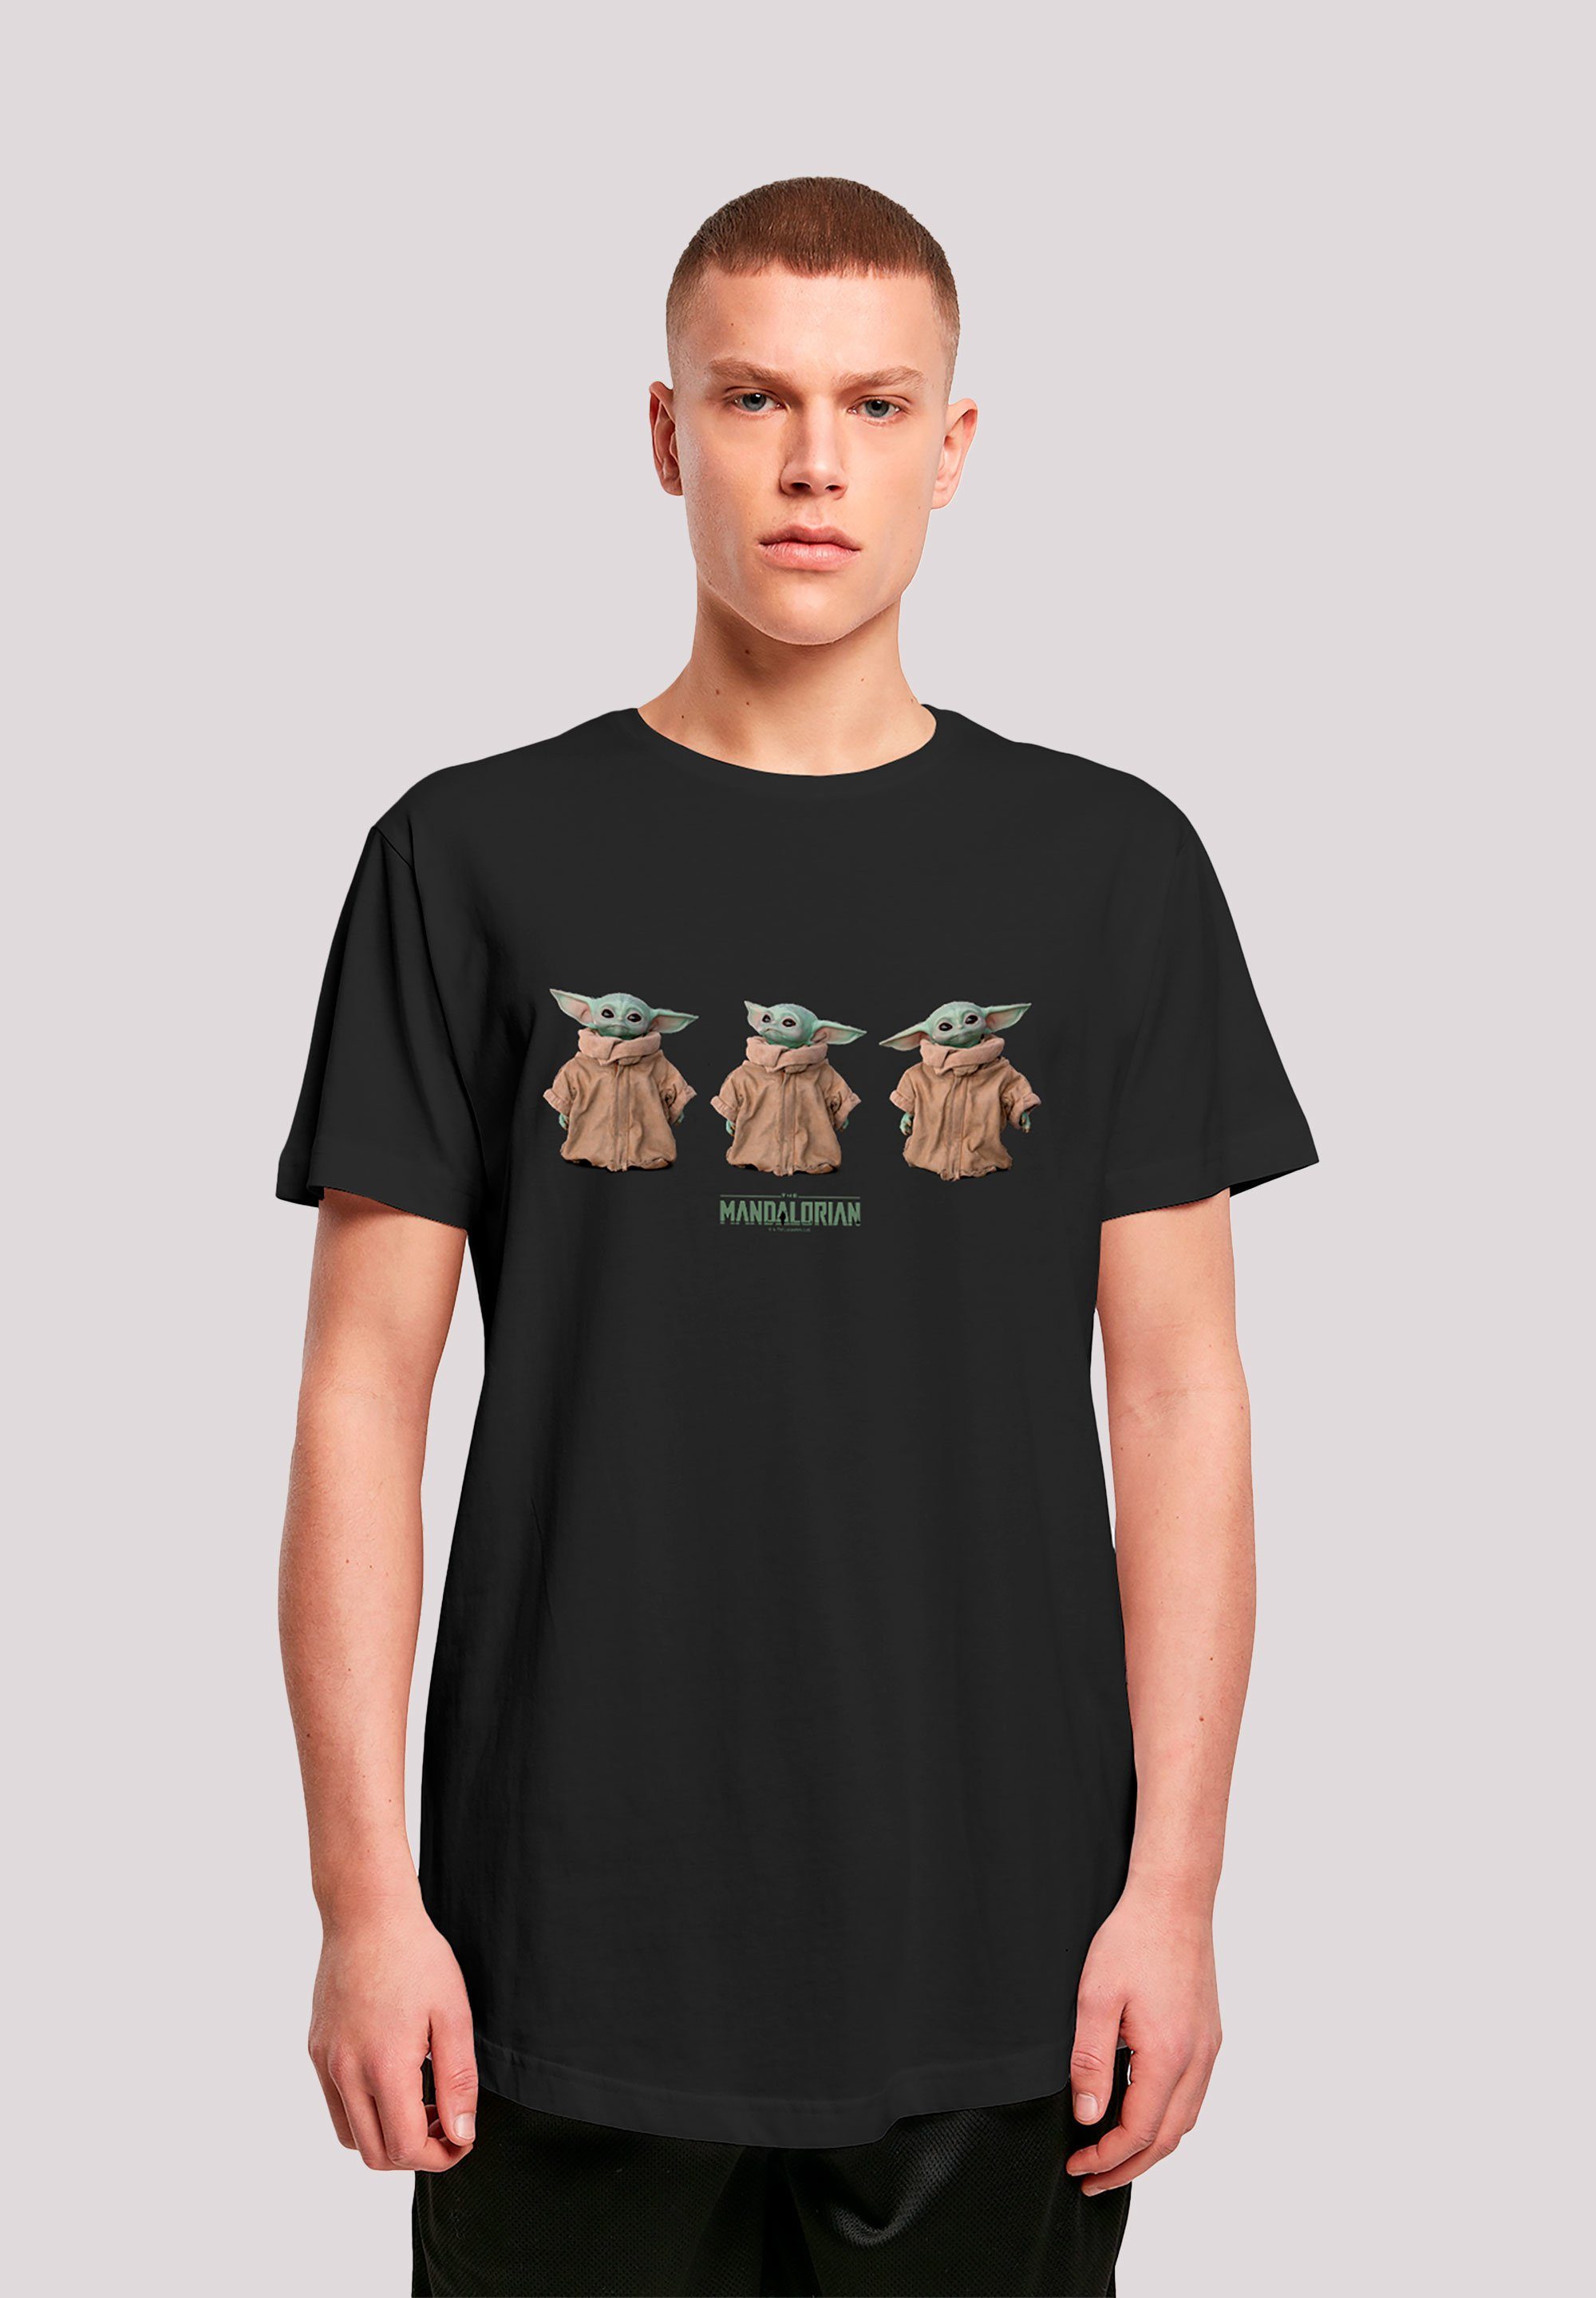 F4NT4STIC T-Shirt Star Wars Mandalorian Print Baby Yoda schwarz The